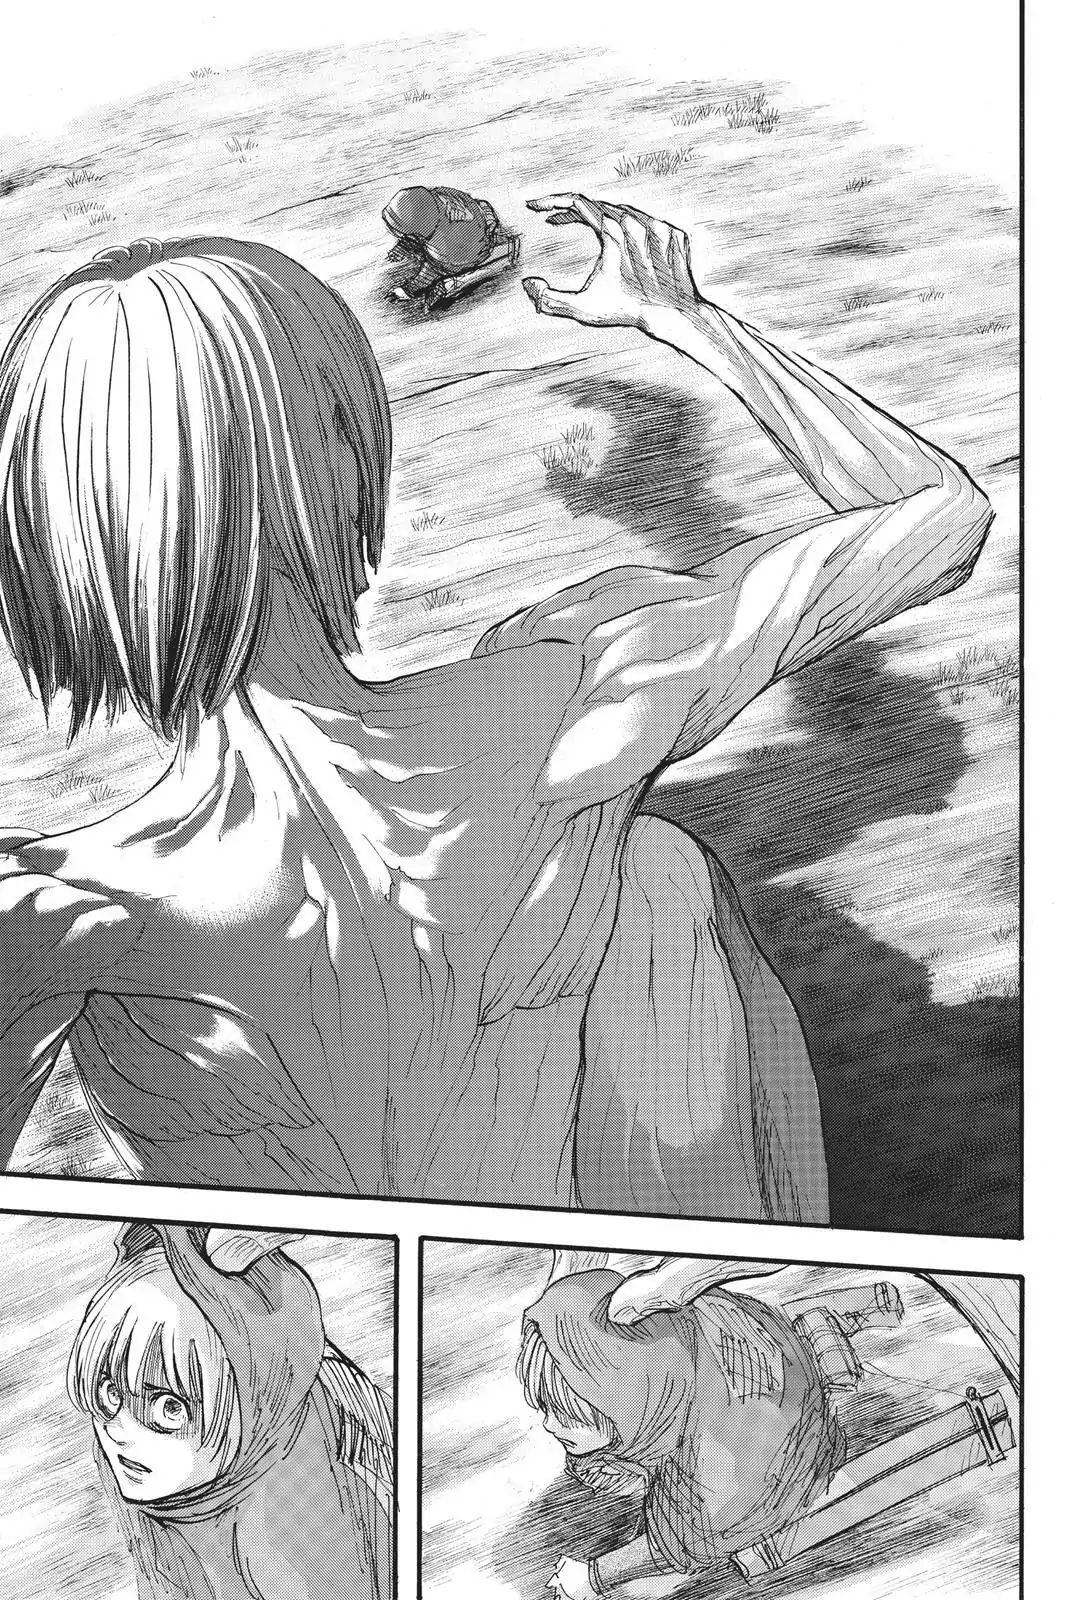 Shingeki No Kyojin, chapter 23 - Attack On Titan Manga Online